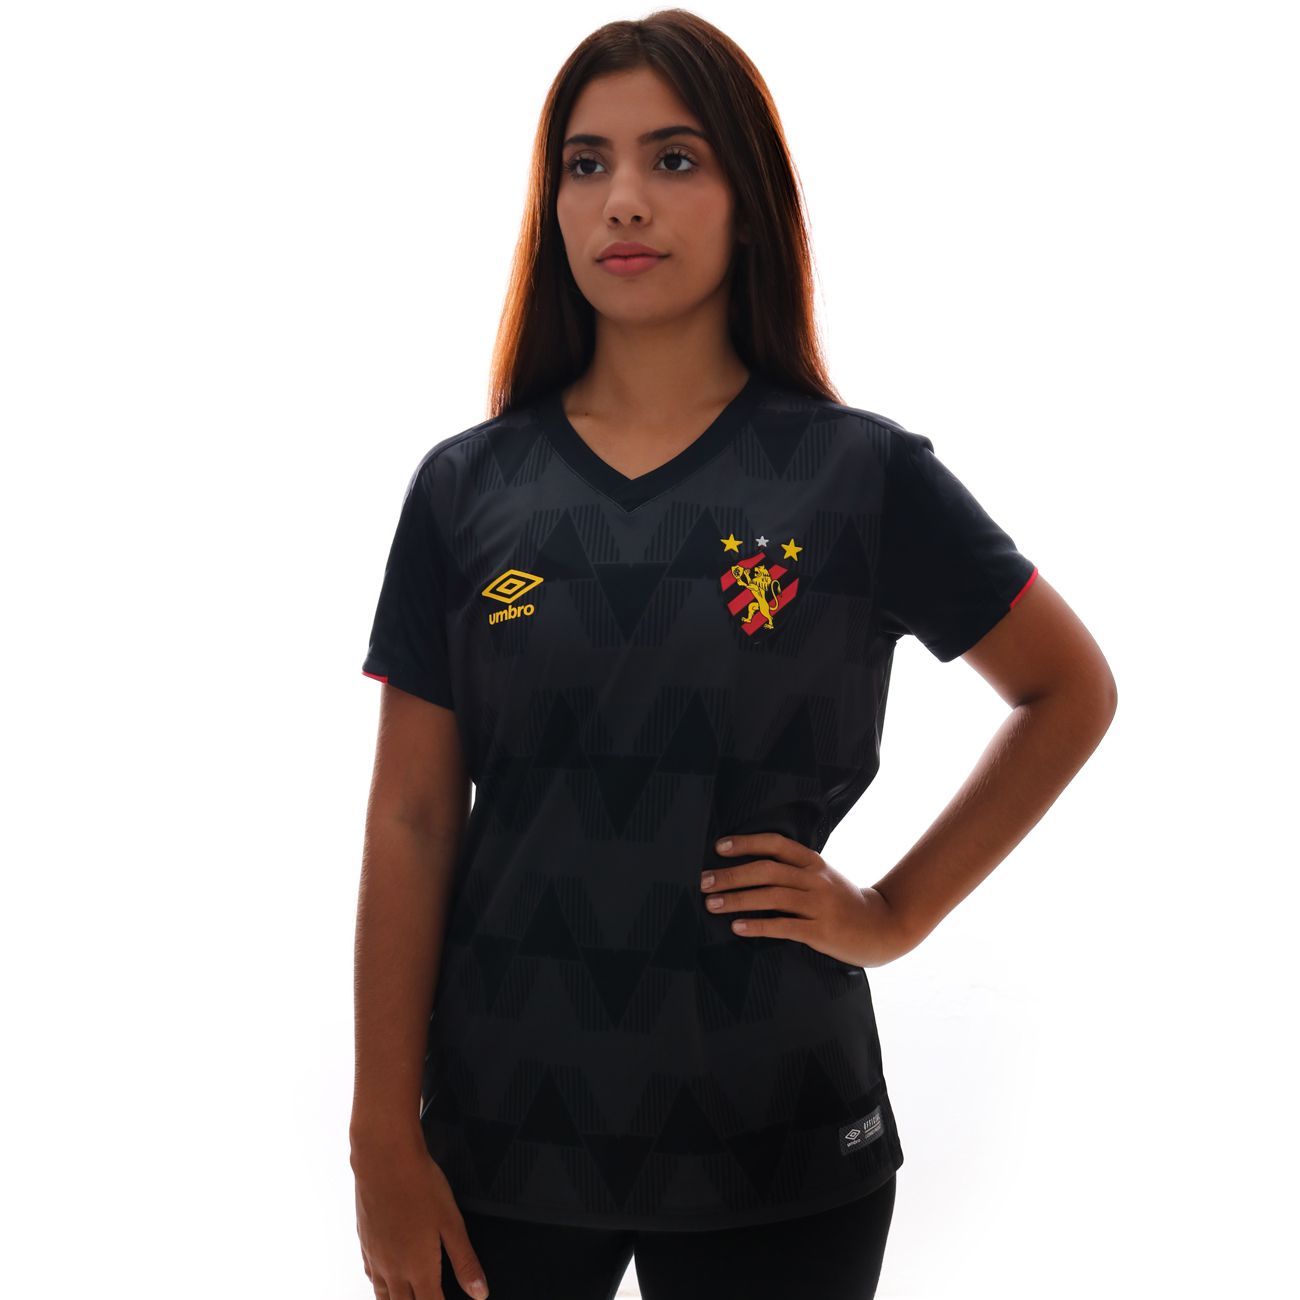 Camisa Umbro Sport III 2019 Feminina